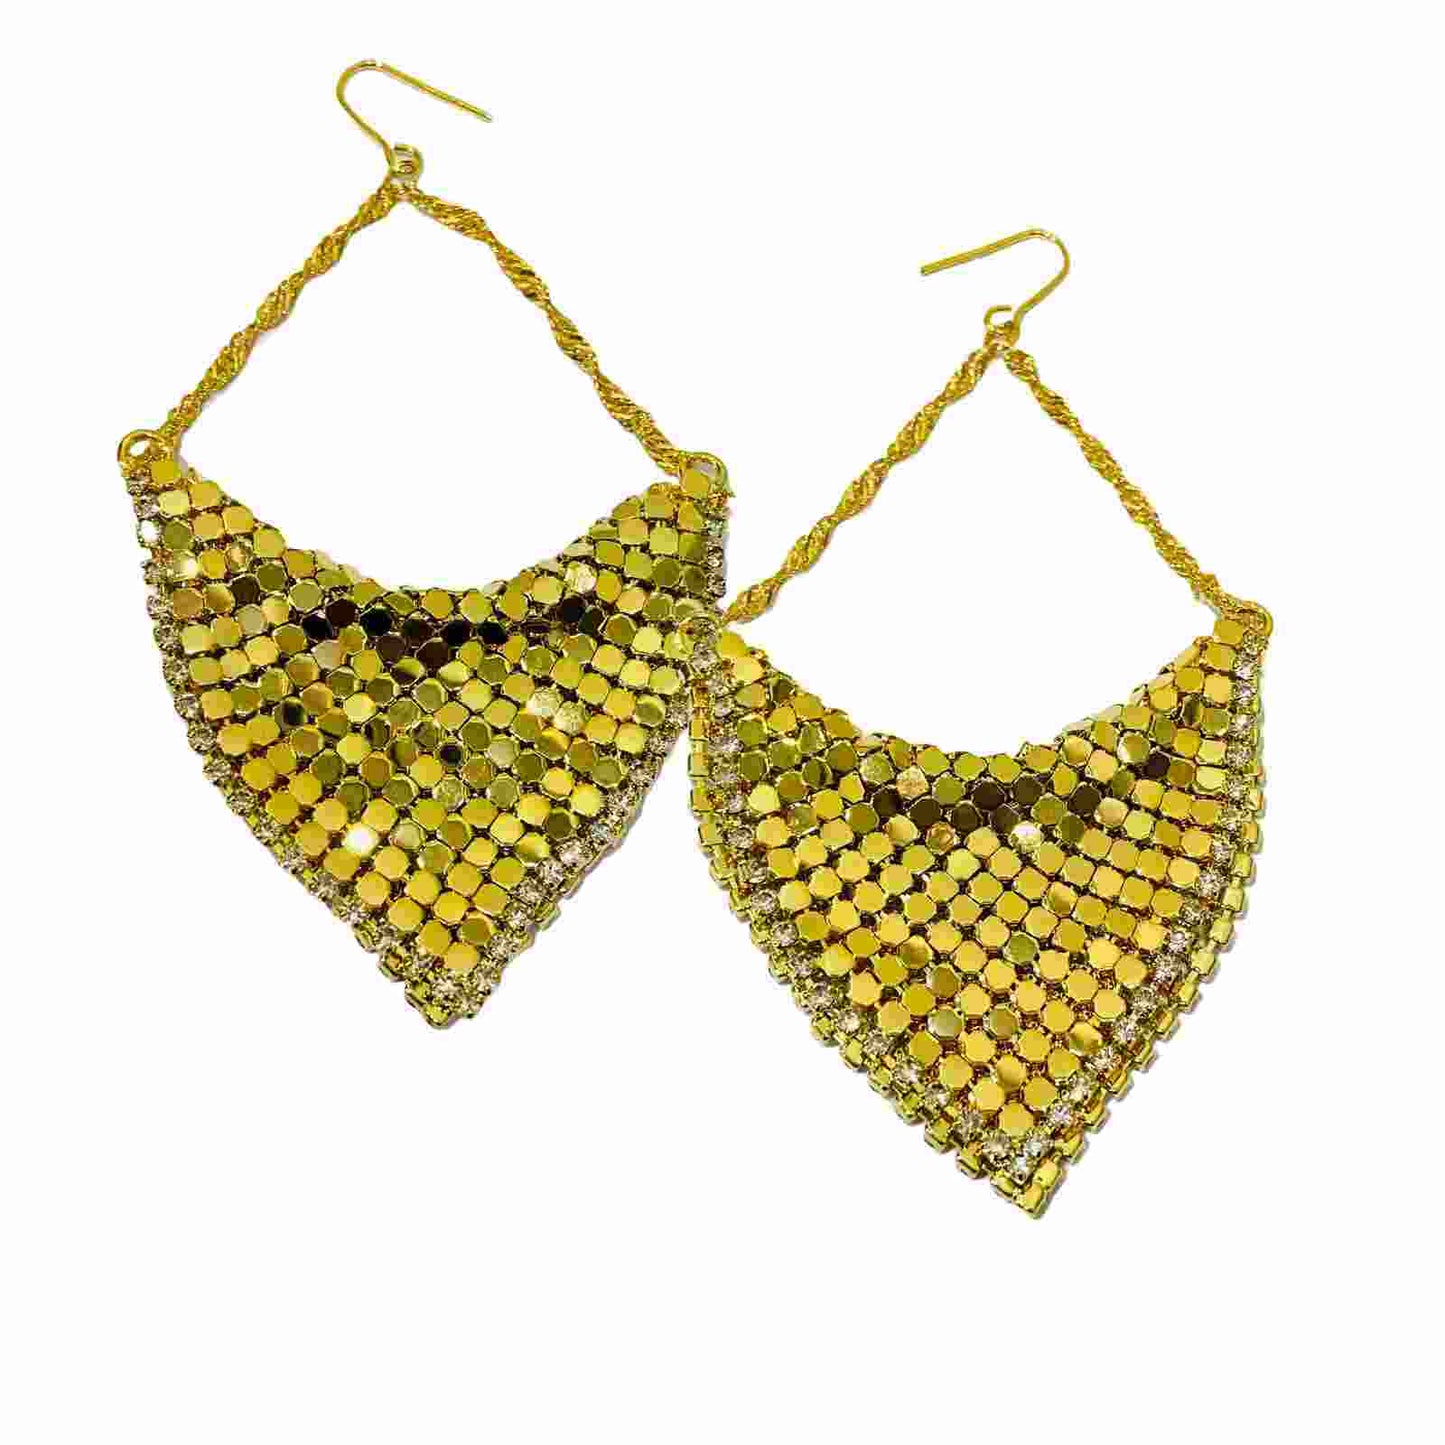 Indo Western Earrings | Gold Plated Earrings for Women | Artificial Jewelry